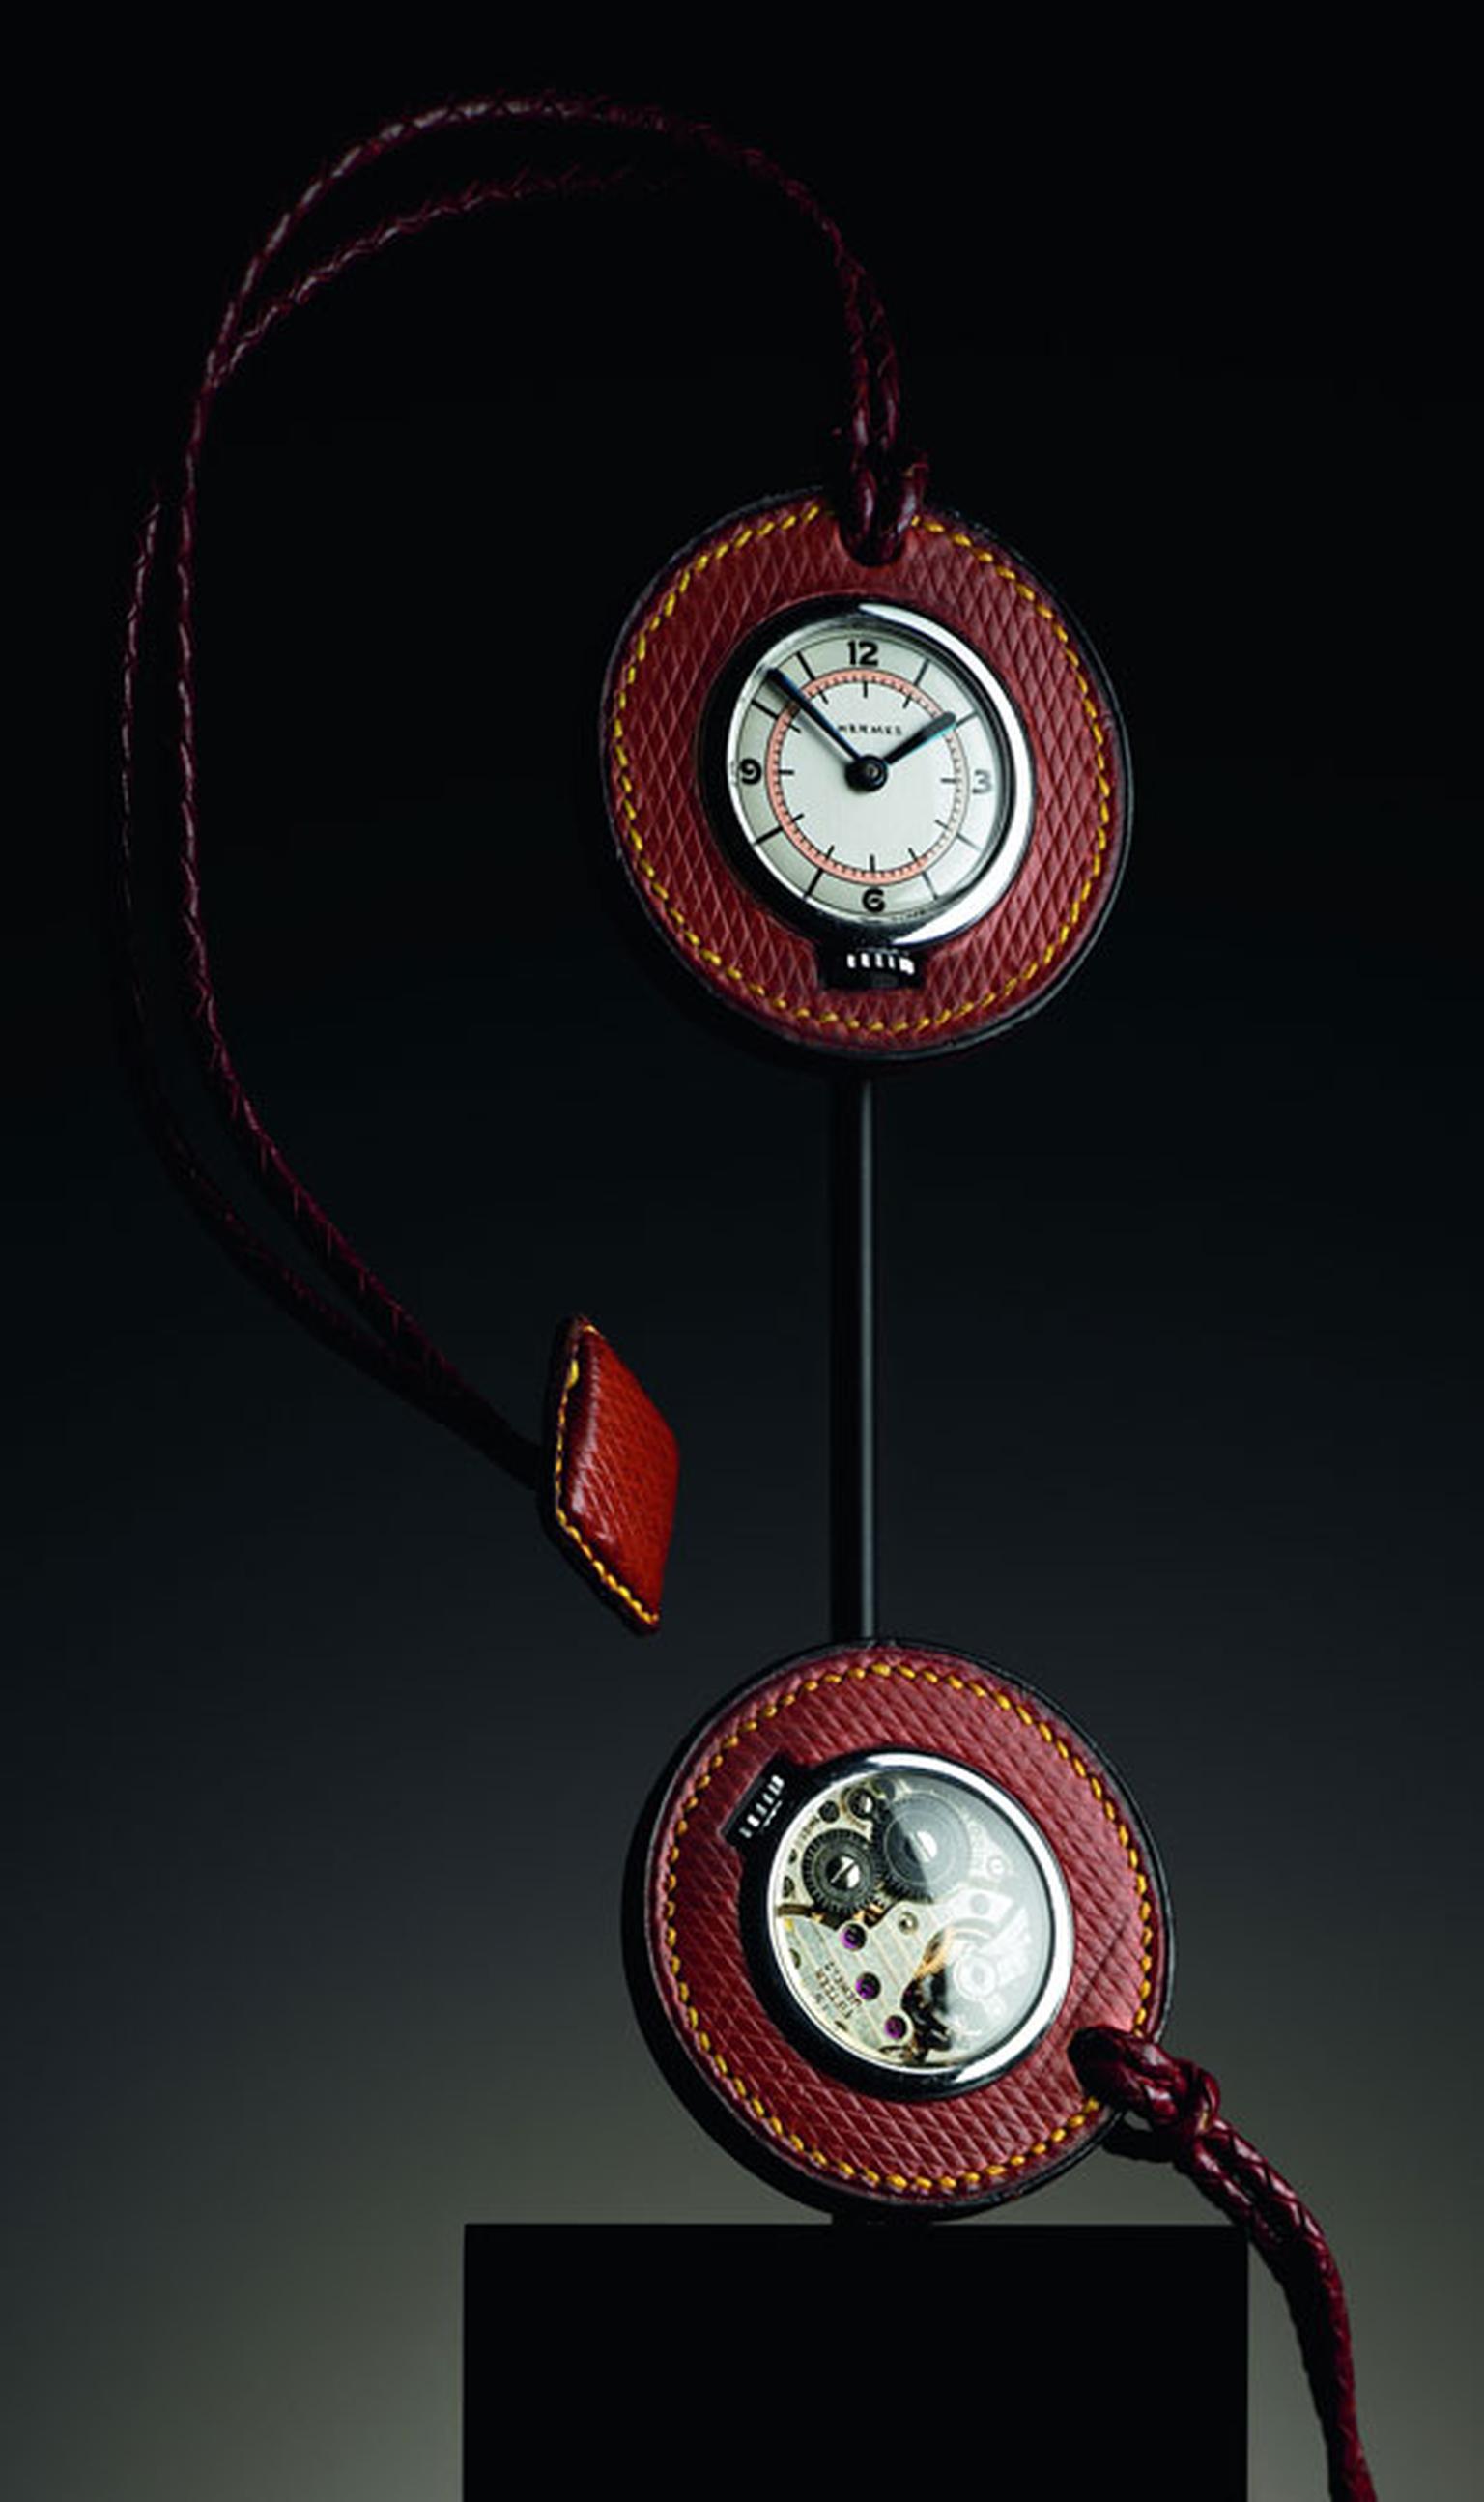 Hermes. Buttonhole pocket watch, around 1930